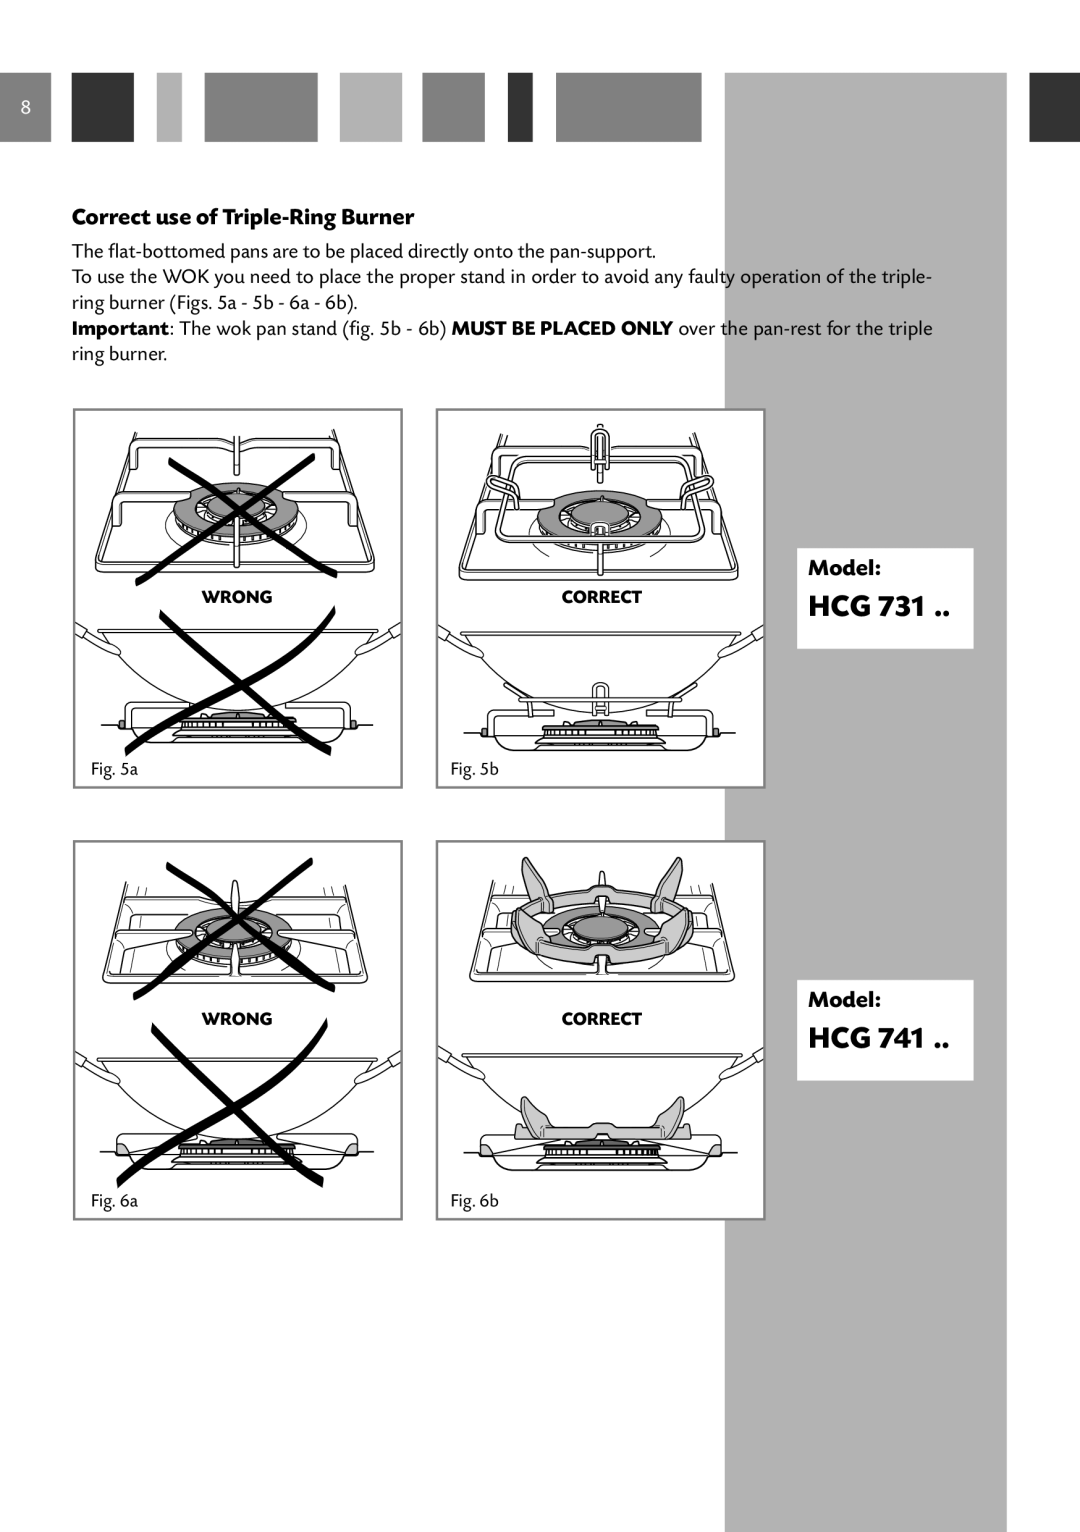 CDA HCG 731, HCG 741 manual Correct use of Triple-RingBurner, Model 